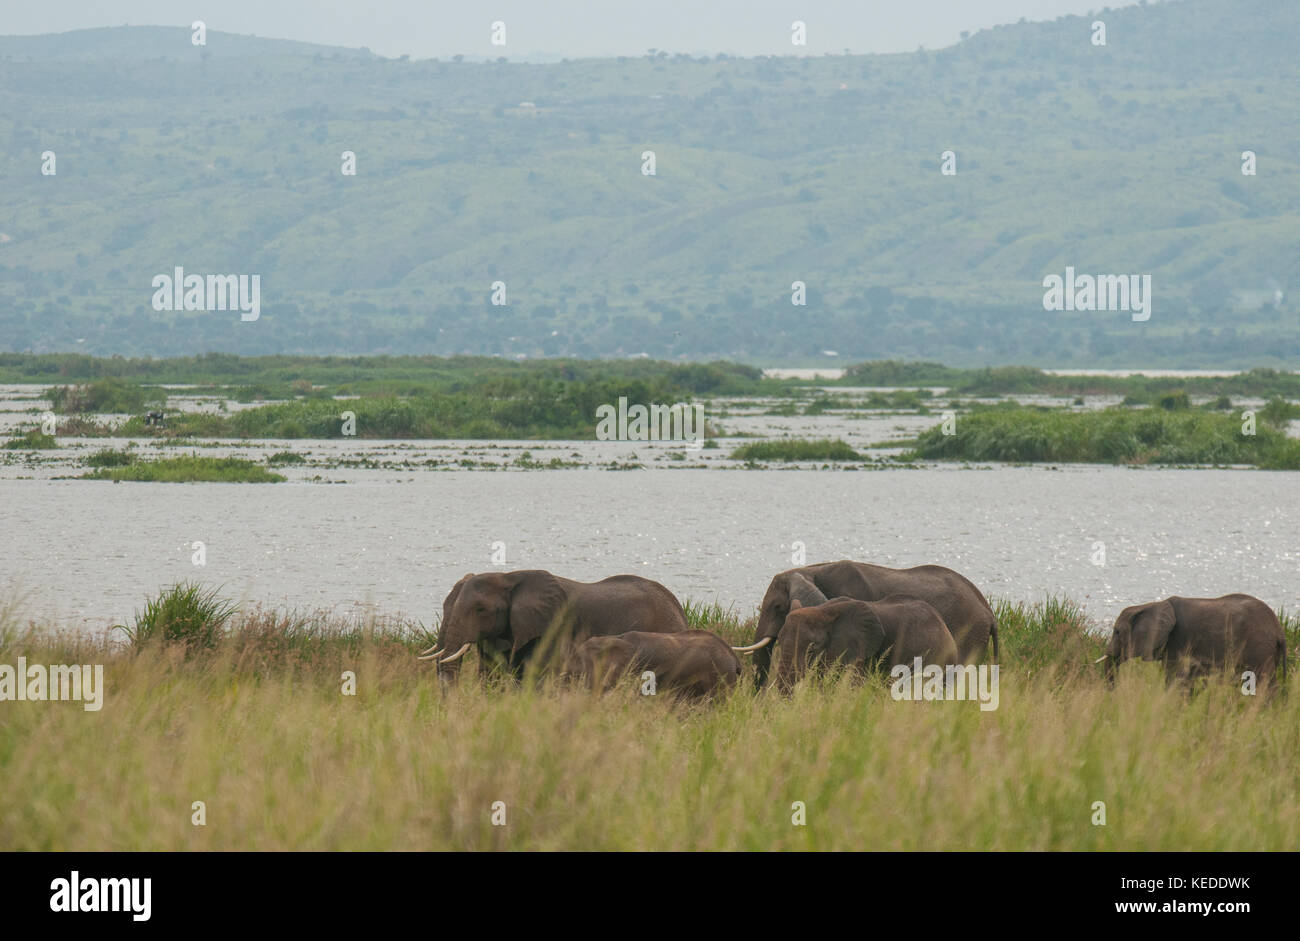 Afrikanische Elefanten neben den Lake Albert, über die internationale Grenze in der Demokratischen Republik Kongo. Stockfoto